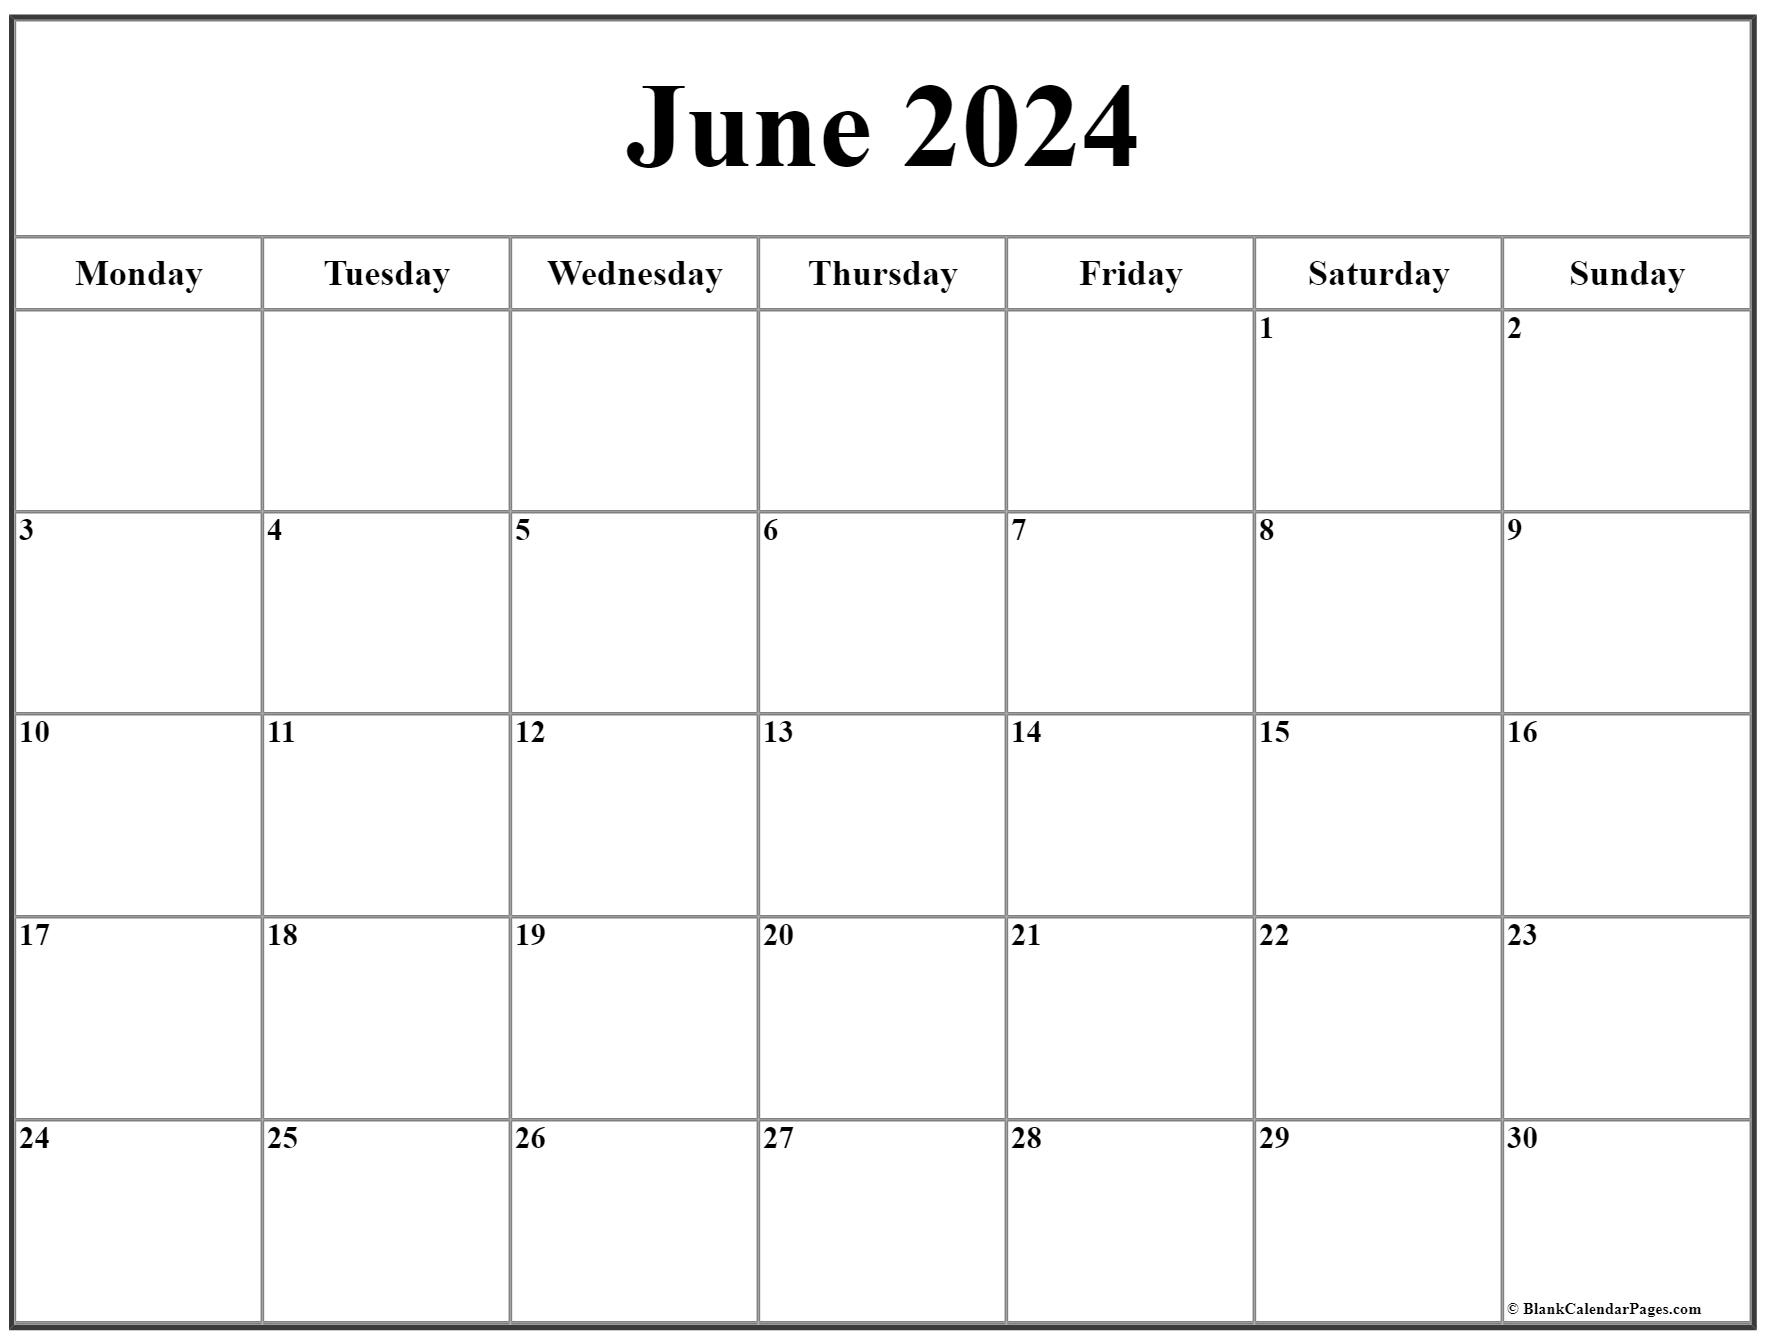 June 2024 Monday Calendar | Monday To Sunday for June 2024 Calendar Printable